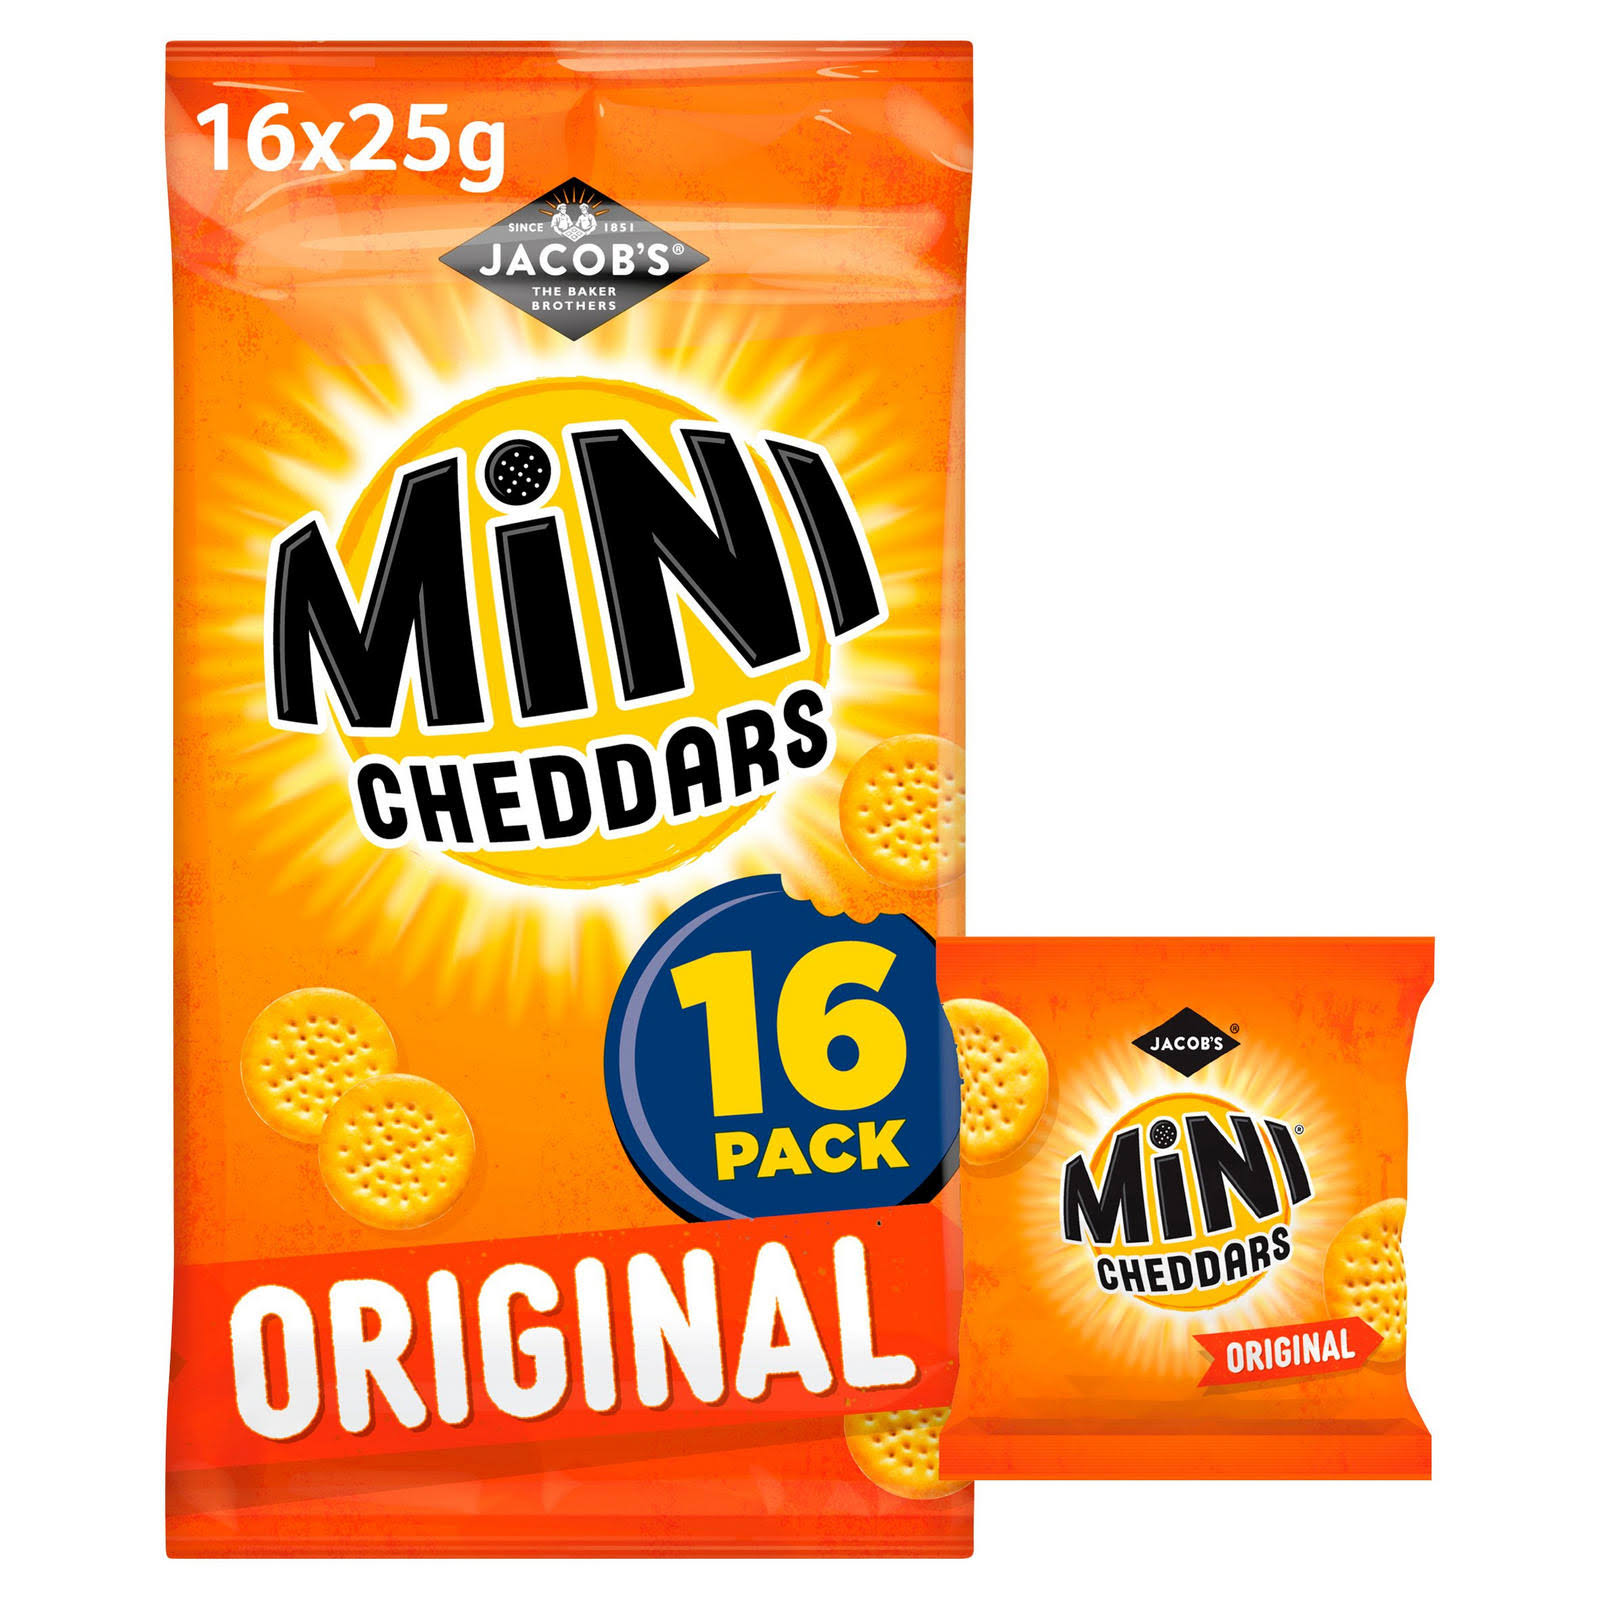 Jacob's Mini Cheddars Original Biscuits - 400g, 16ct